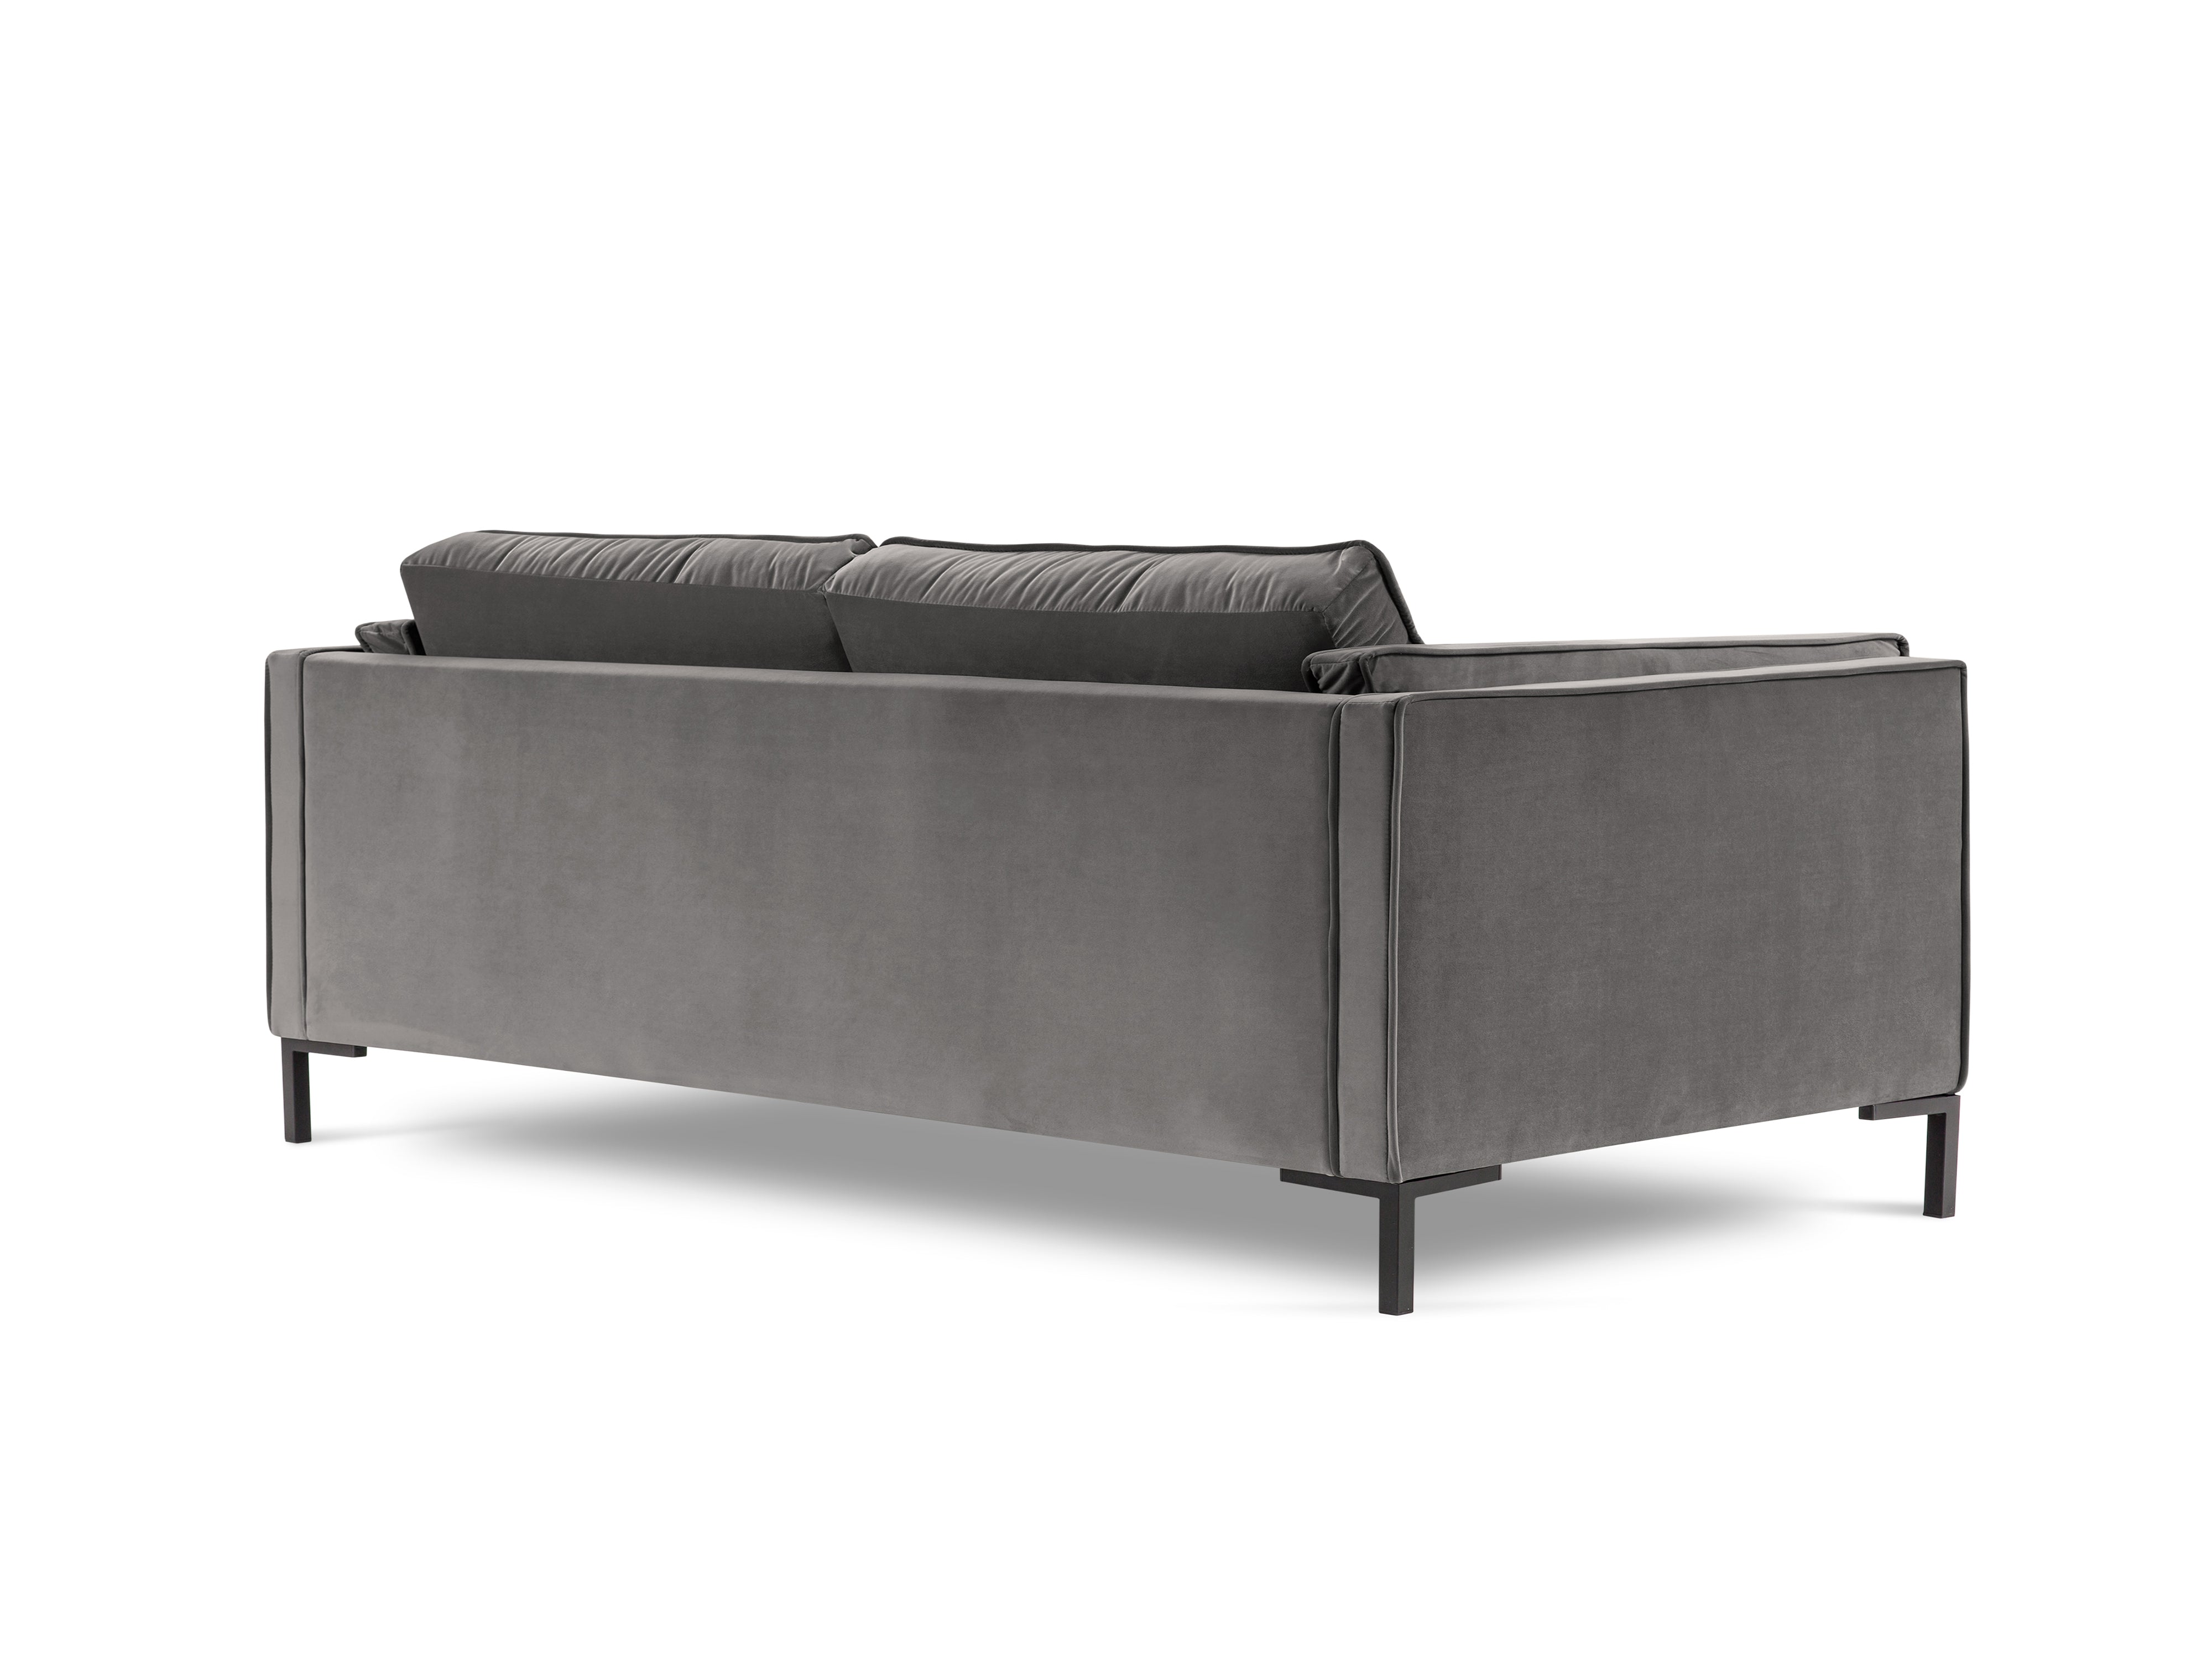 LUIS light grey velvet 3-seater sofa with black base